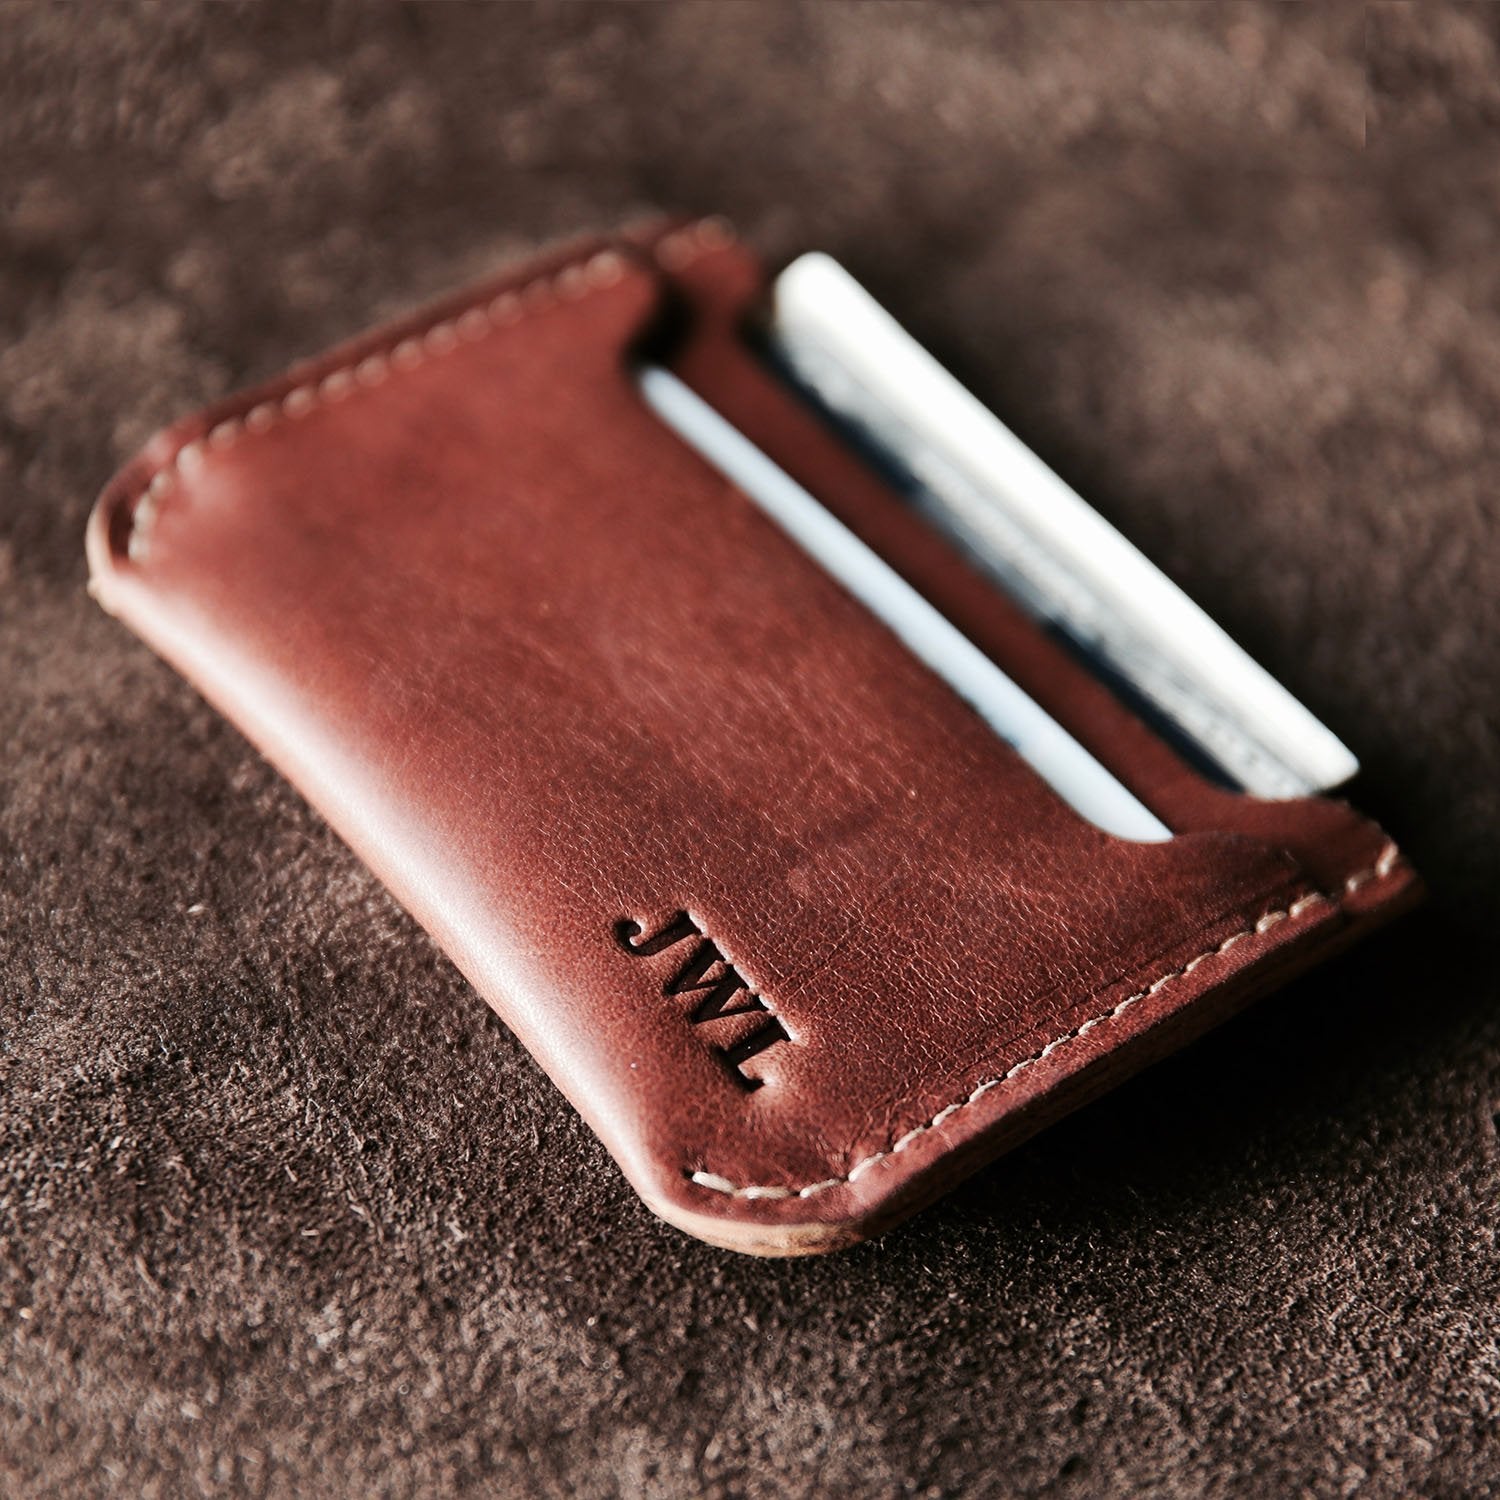 Buy Slim Wallet for Men, Minimalist Mens Wallets, Tactical Card